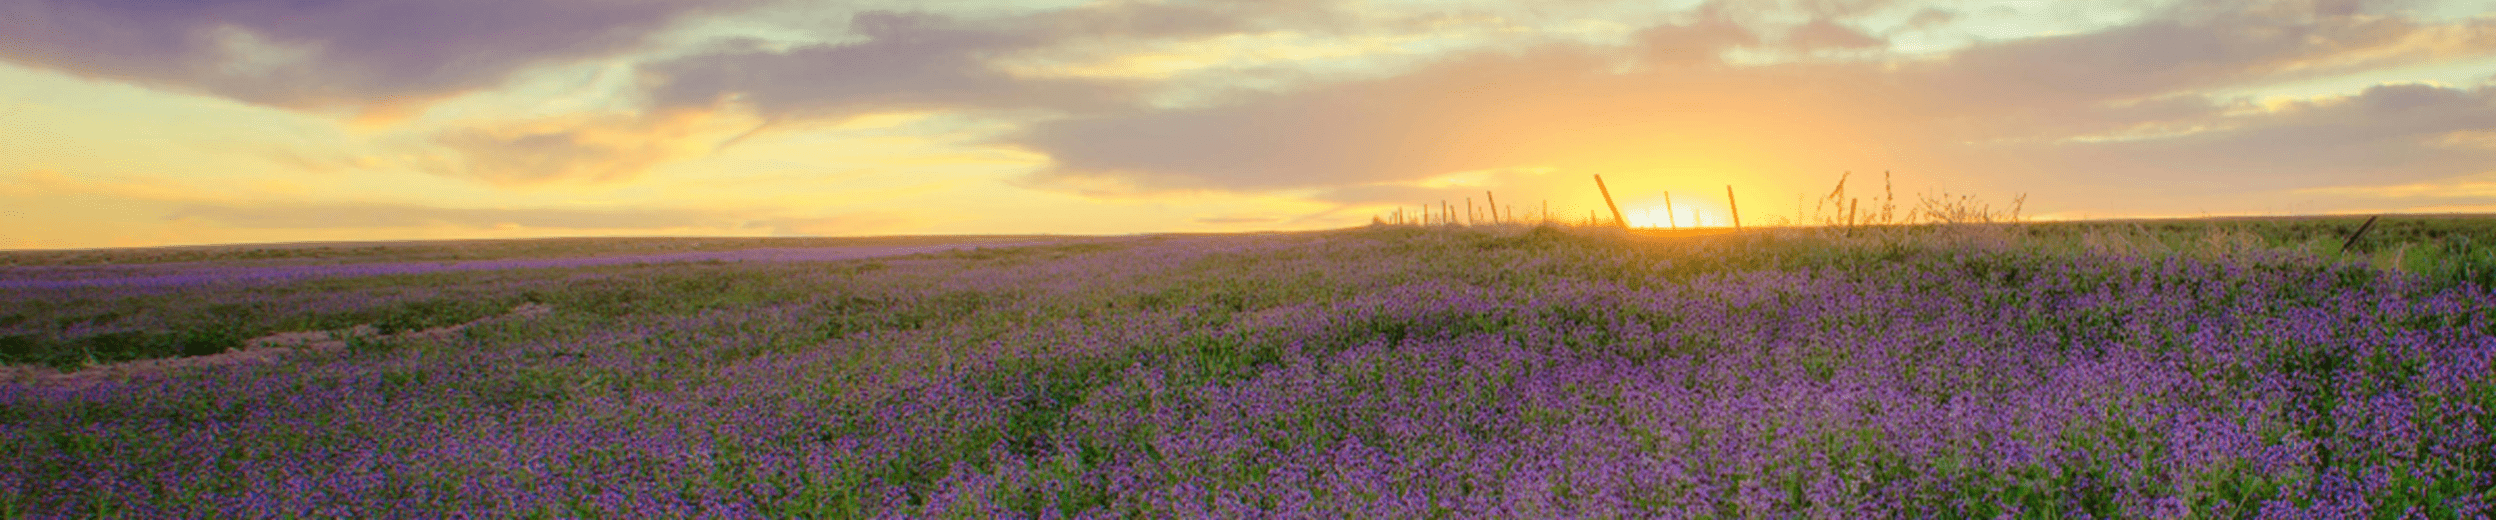 Purple flower field during golden hour